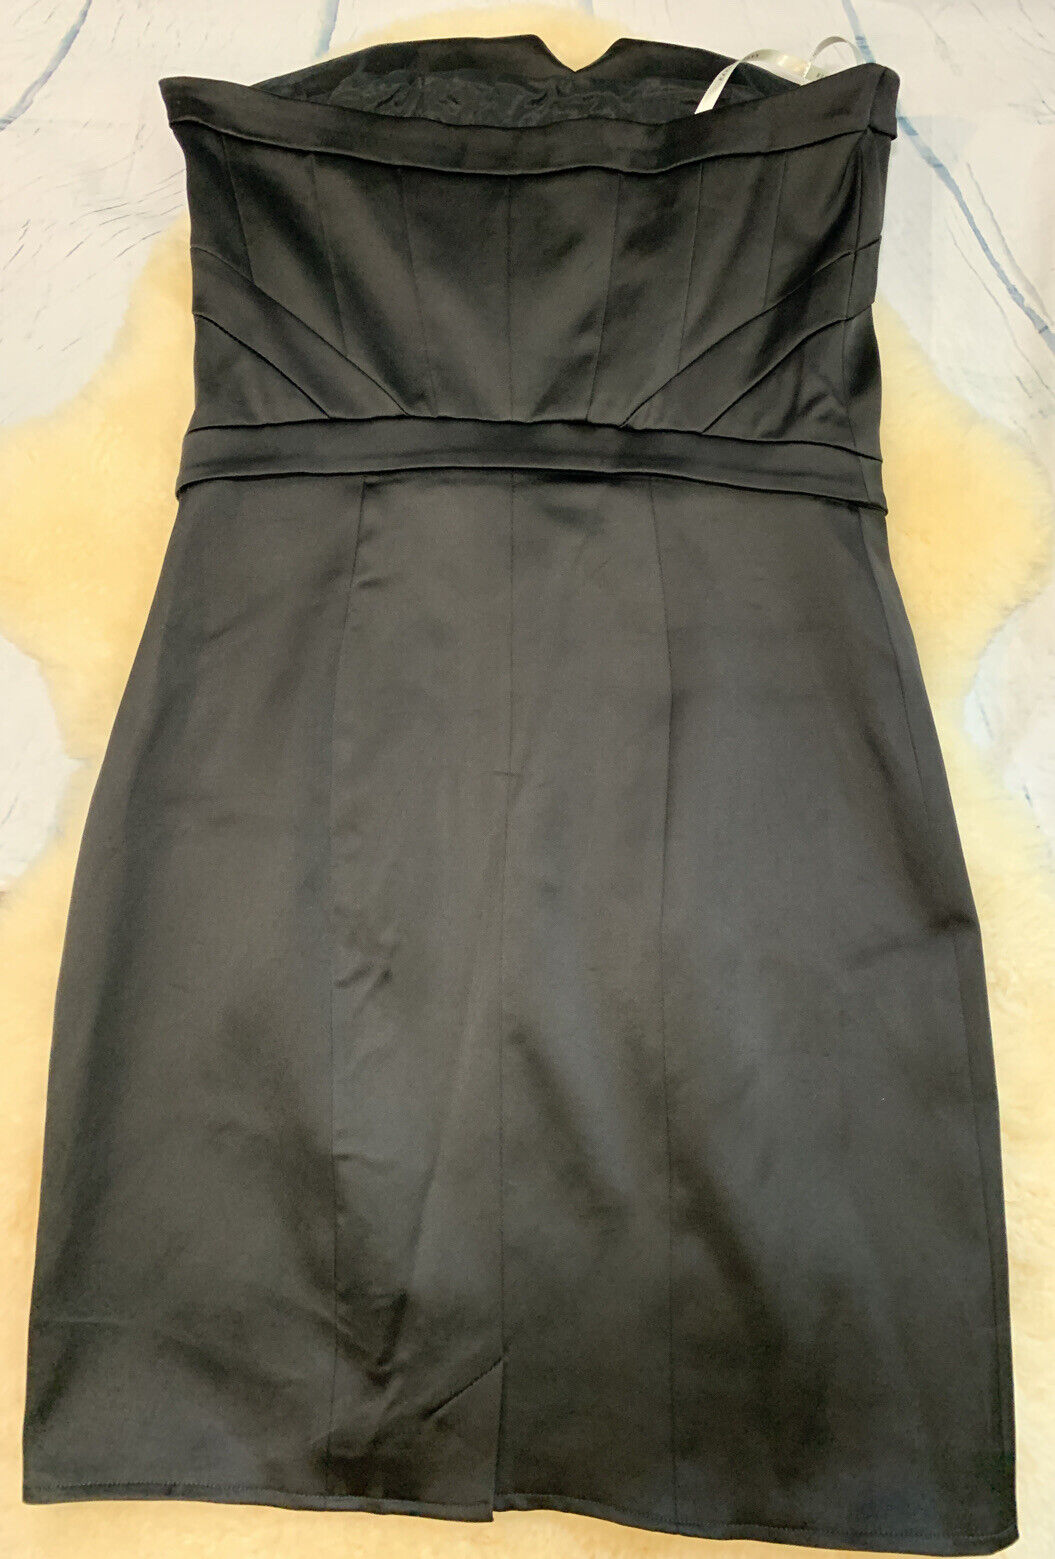 KAREN MILLEN Blue-Black Strapless Satin Cocktail Party Dress SZ 6 US A-Line  | eBay